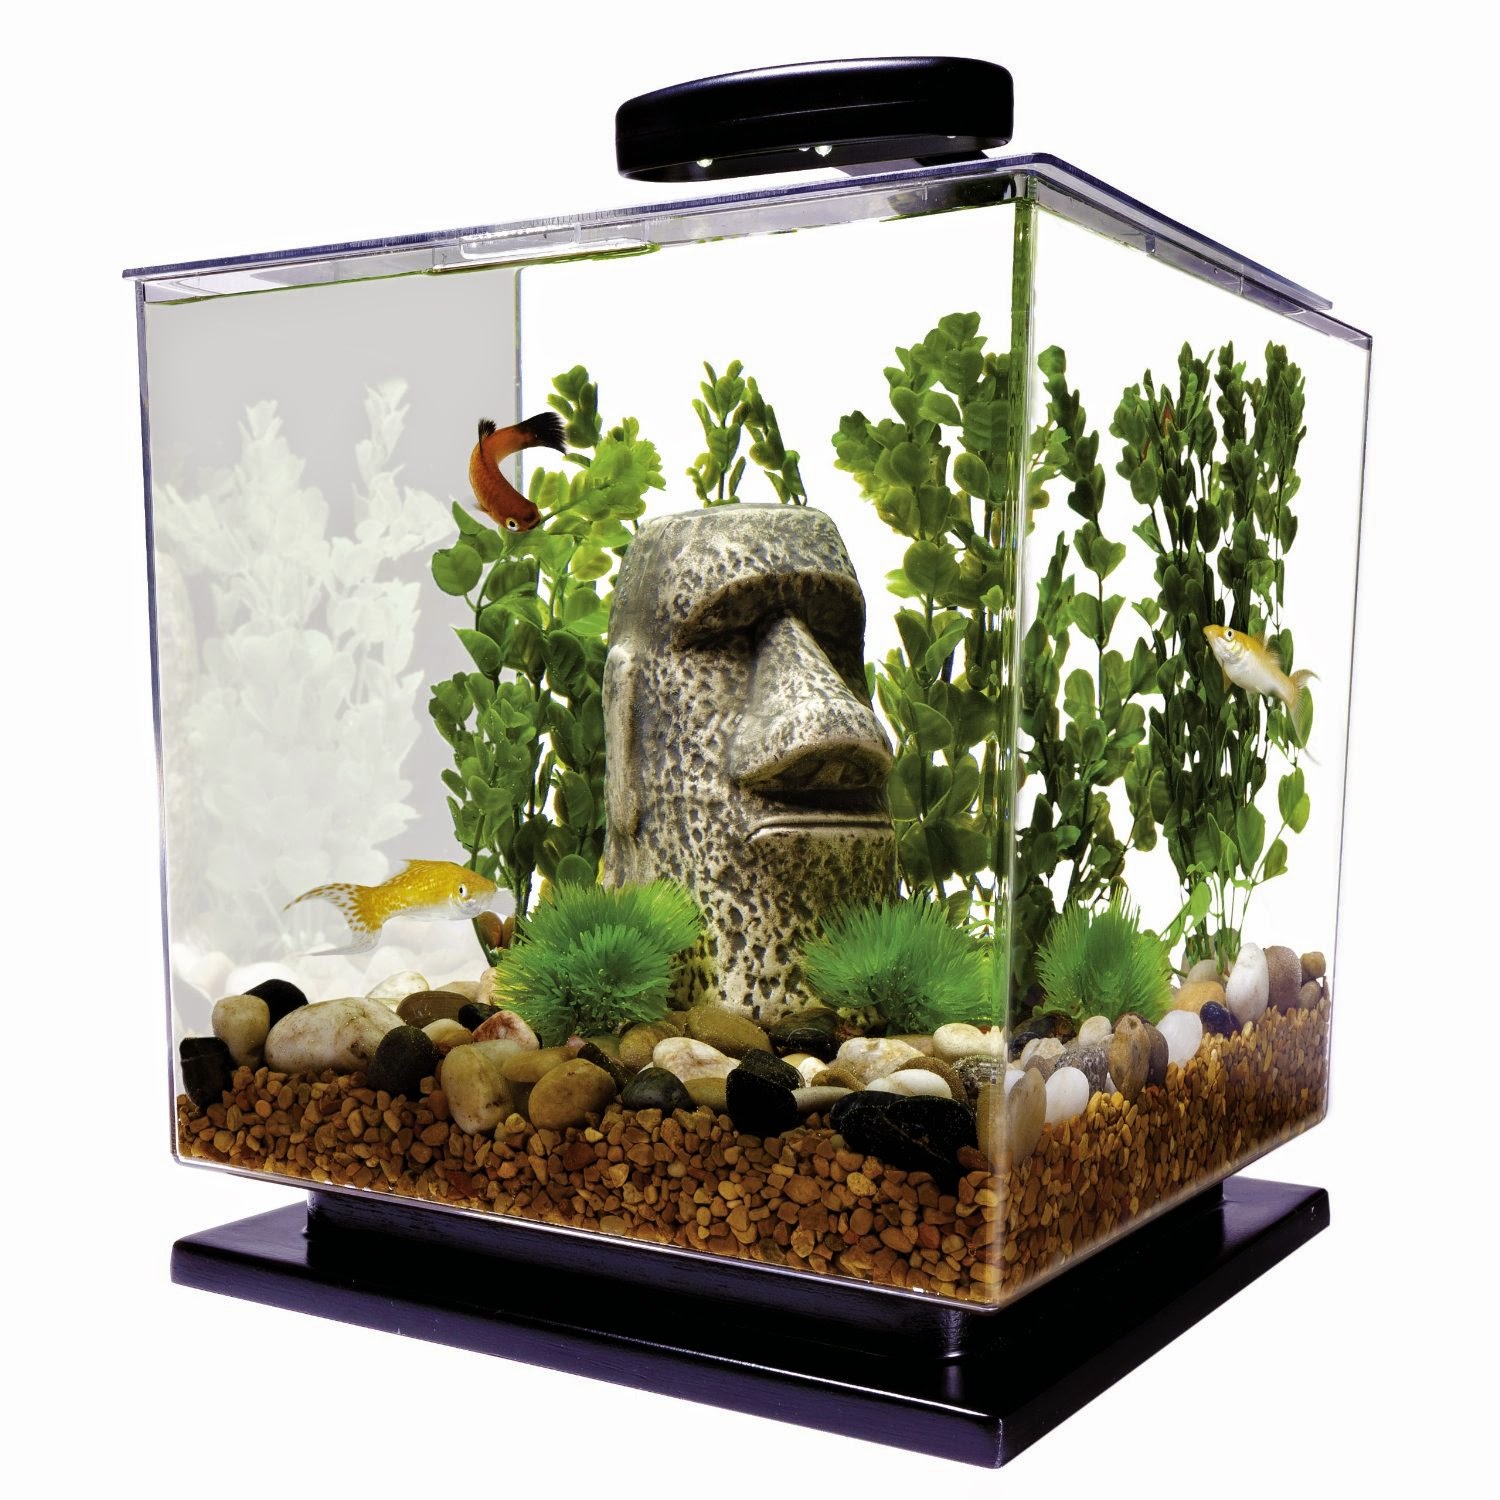 Best Small Betta Fish Tank Betta aquarium panaview koller aquariums freshwater macheplus